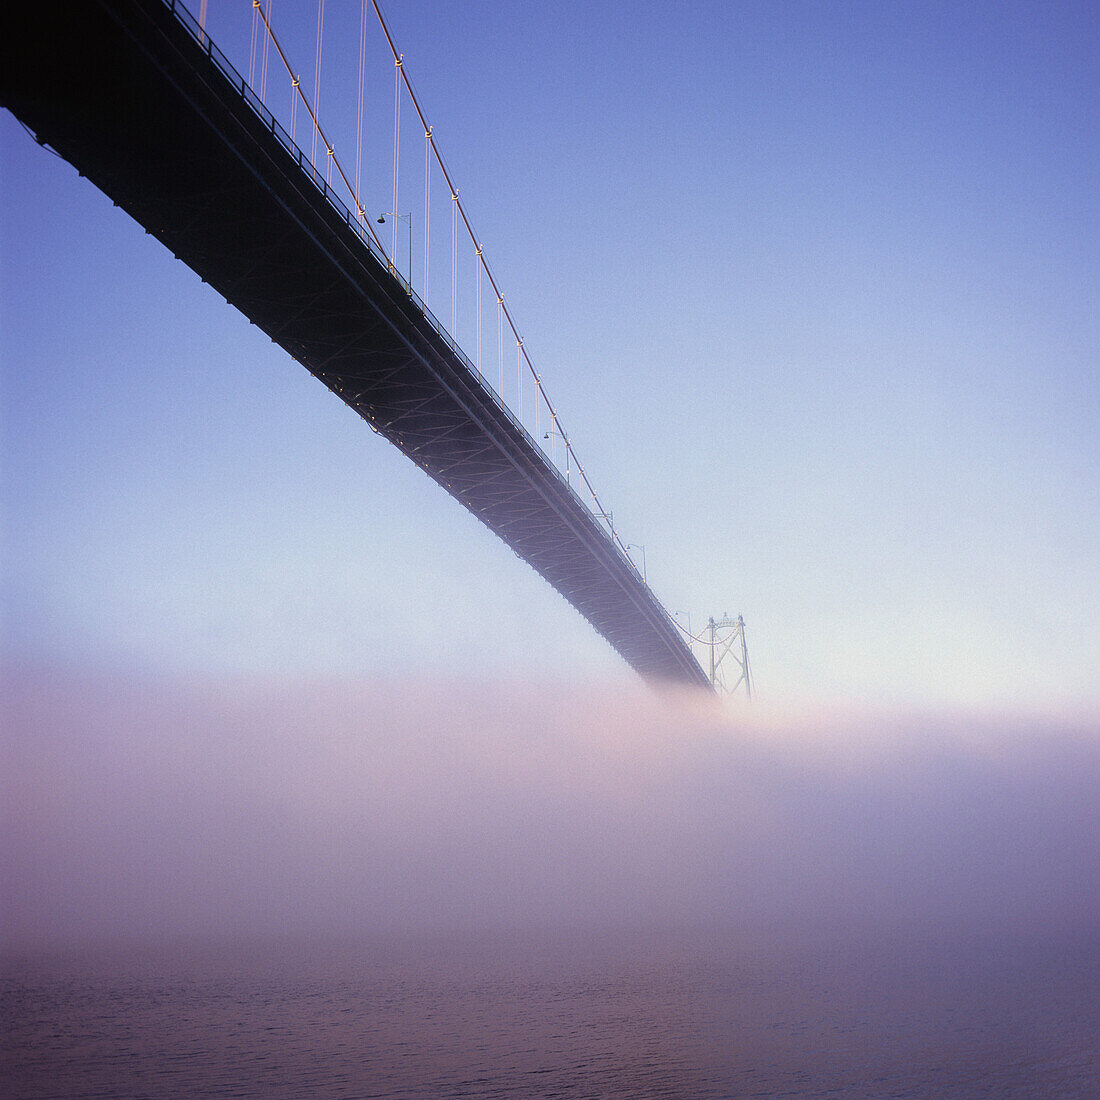 Lions Gate Bridge over sea in fog, Vancouver, Canada